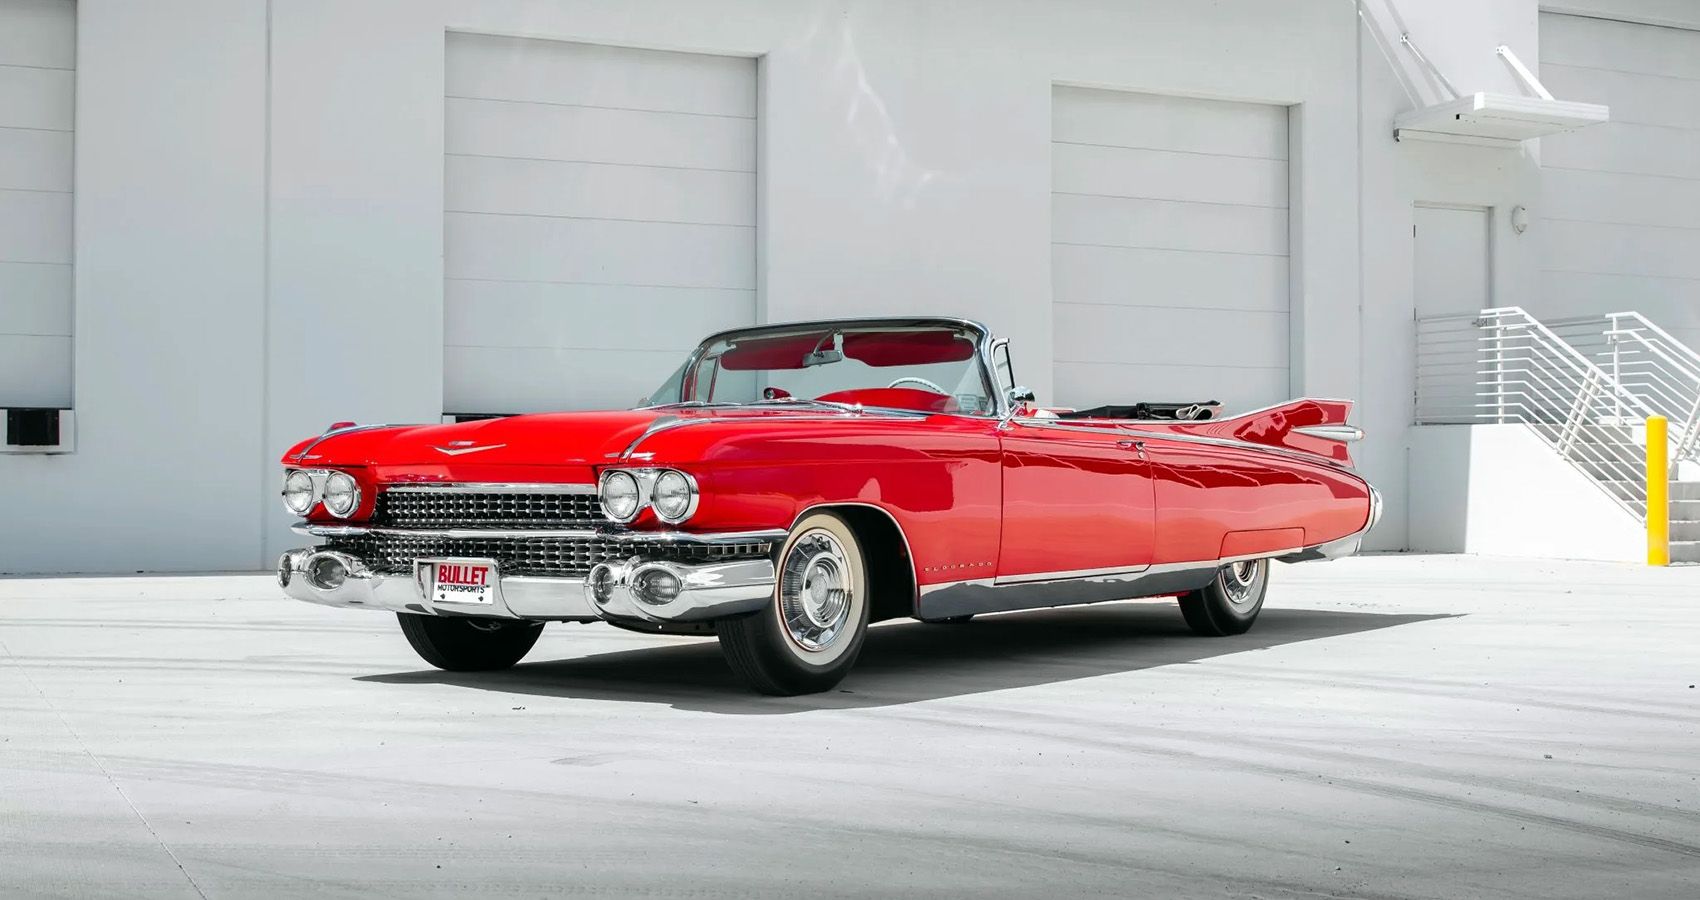 Red Cadillac Eldorado from 1959, 3/4 view